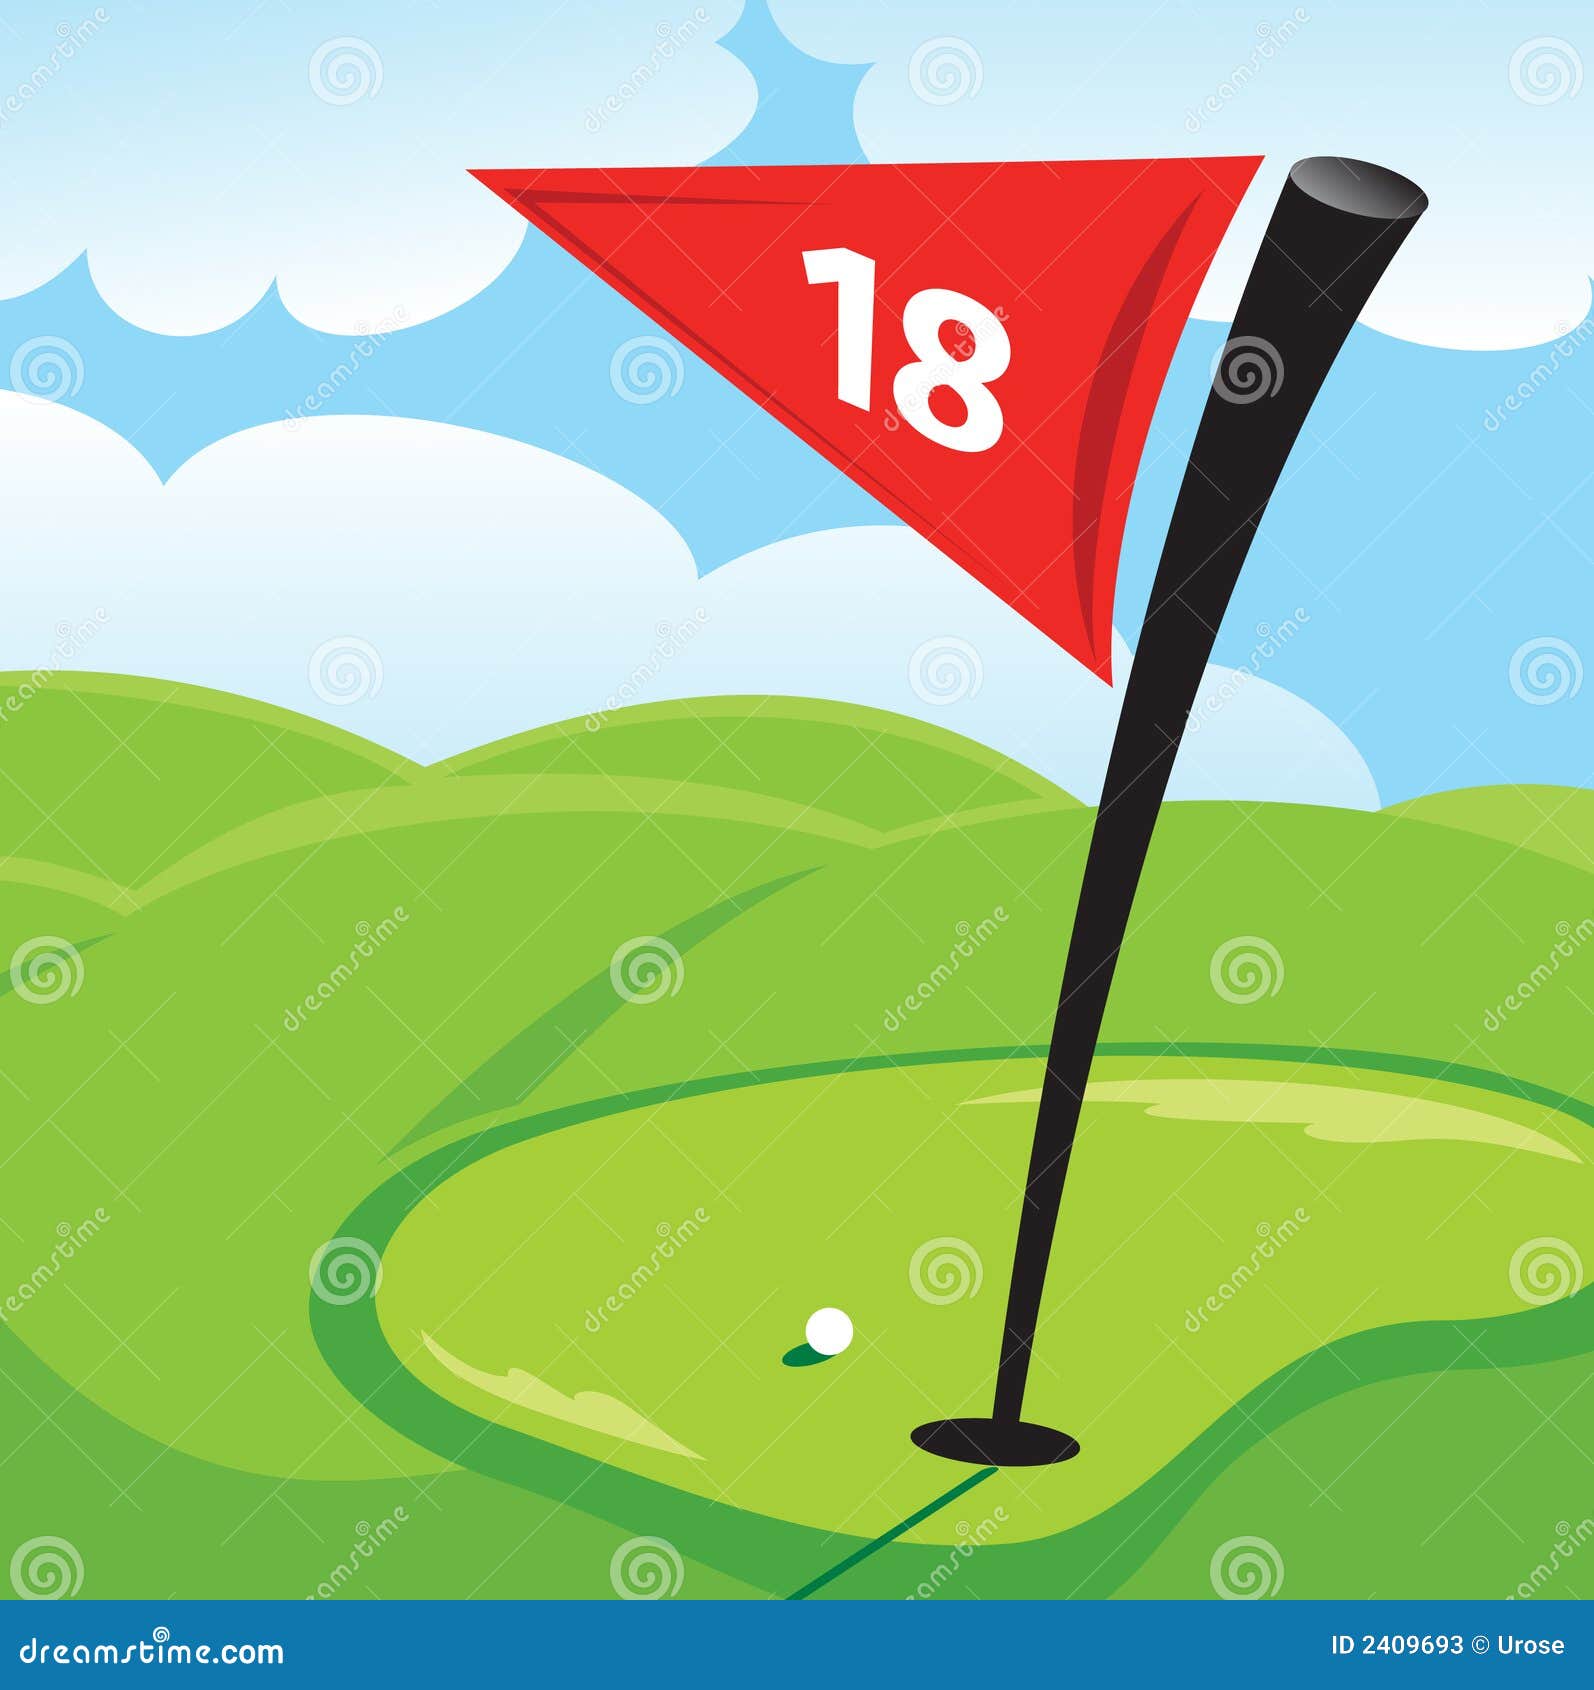 free clipart golf fairway - photo #27